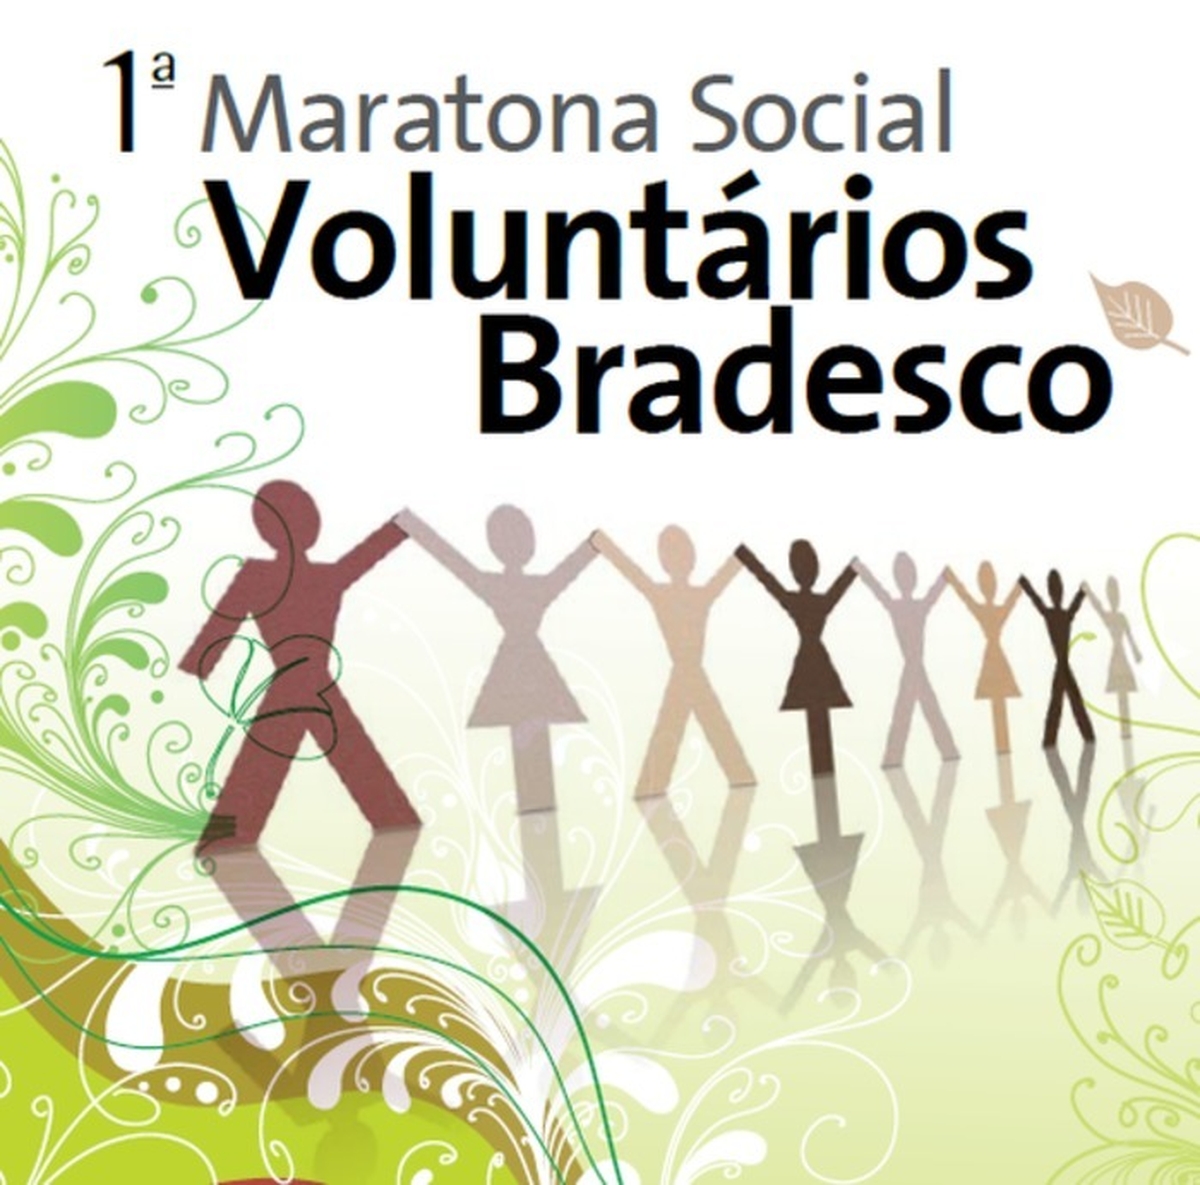 1ª Maratona Social Voluntários Bradesco (2007)